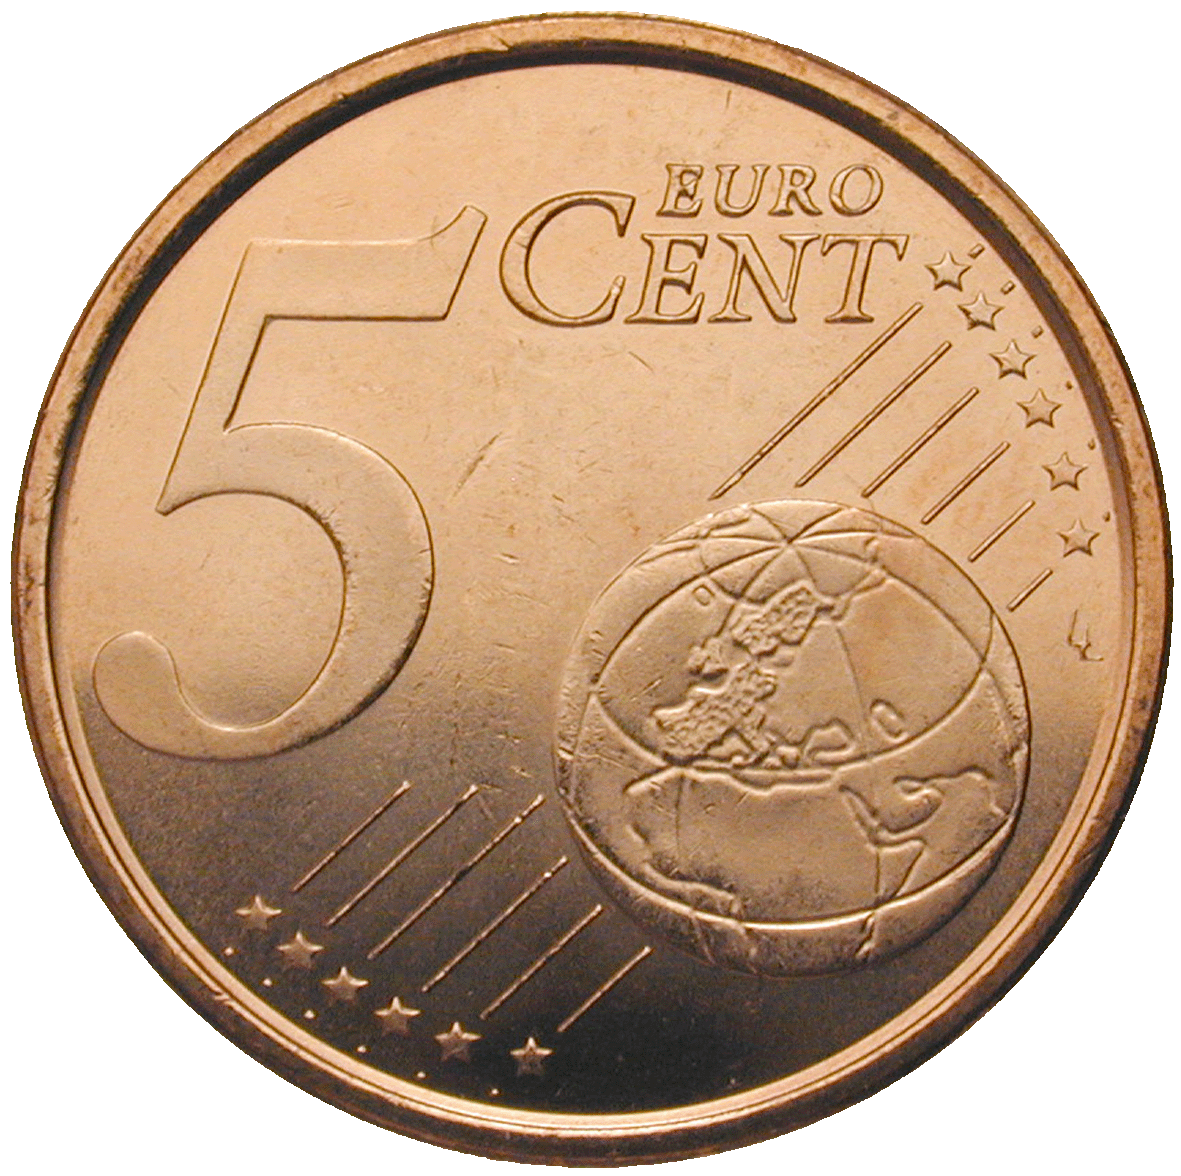 Königreich Spanien, Juan Carlos, 5 Eurocent 2004 (reverse)